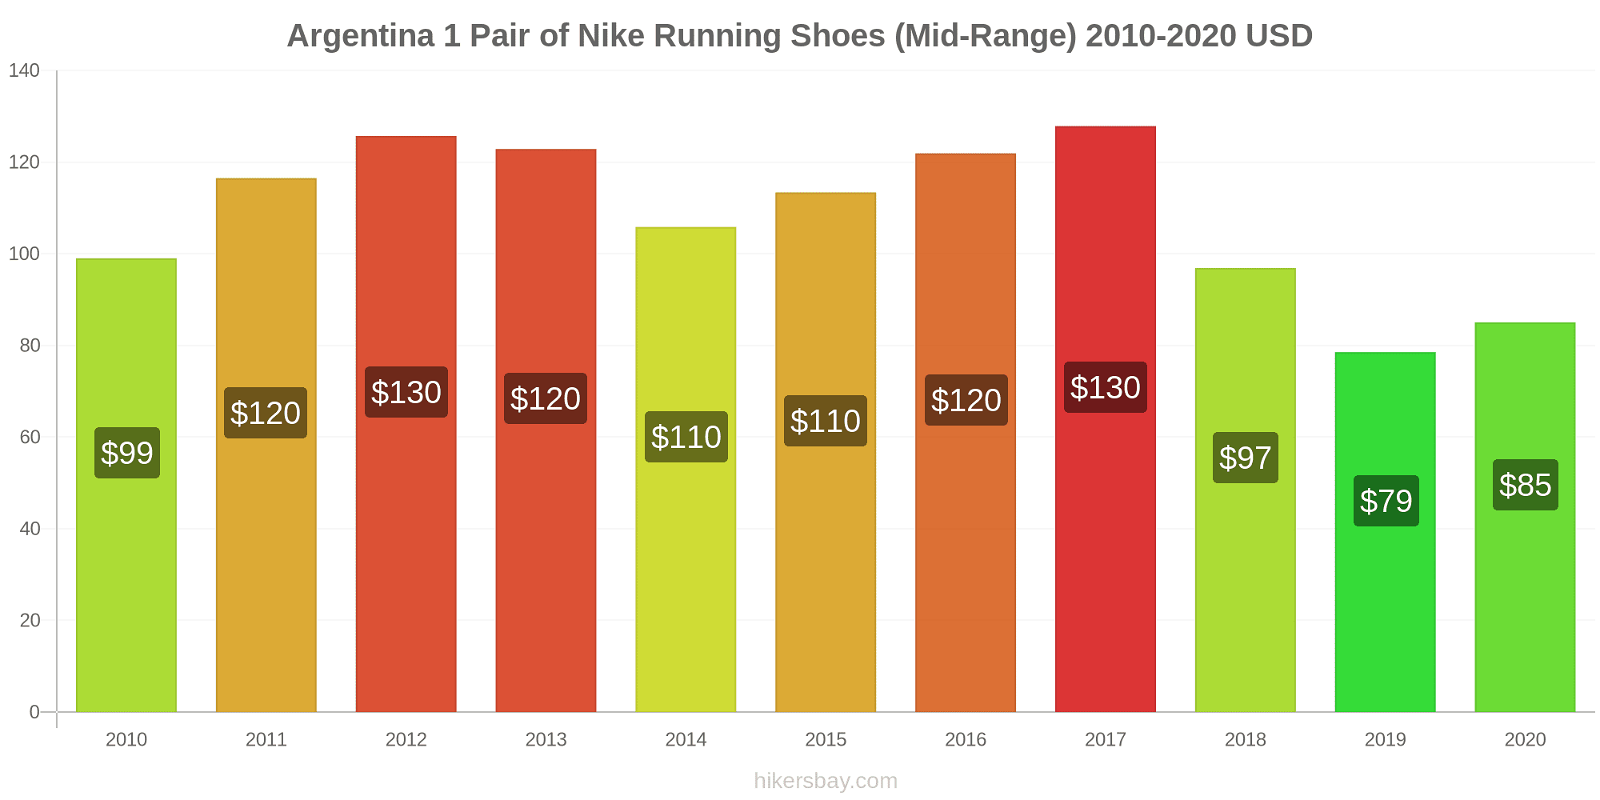 Argentina price changes 1 Pair of Nike Running Shoes (Mid-Range) hikersbay.com